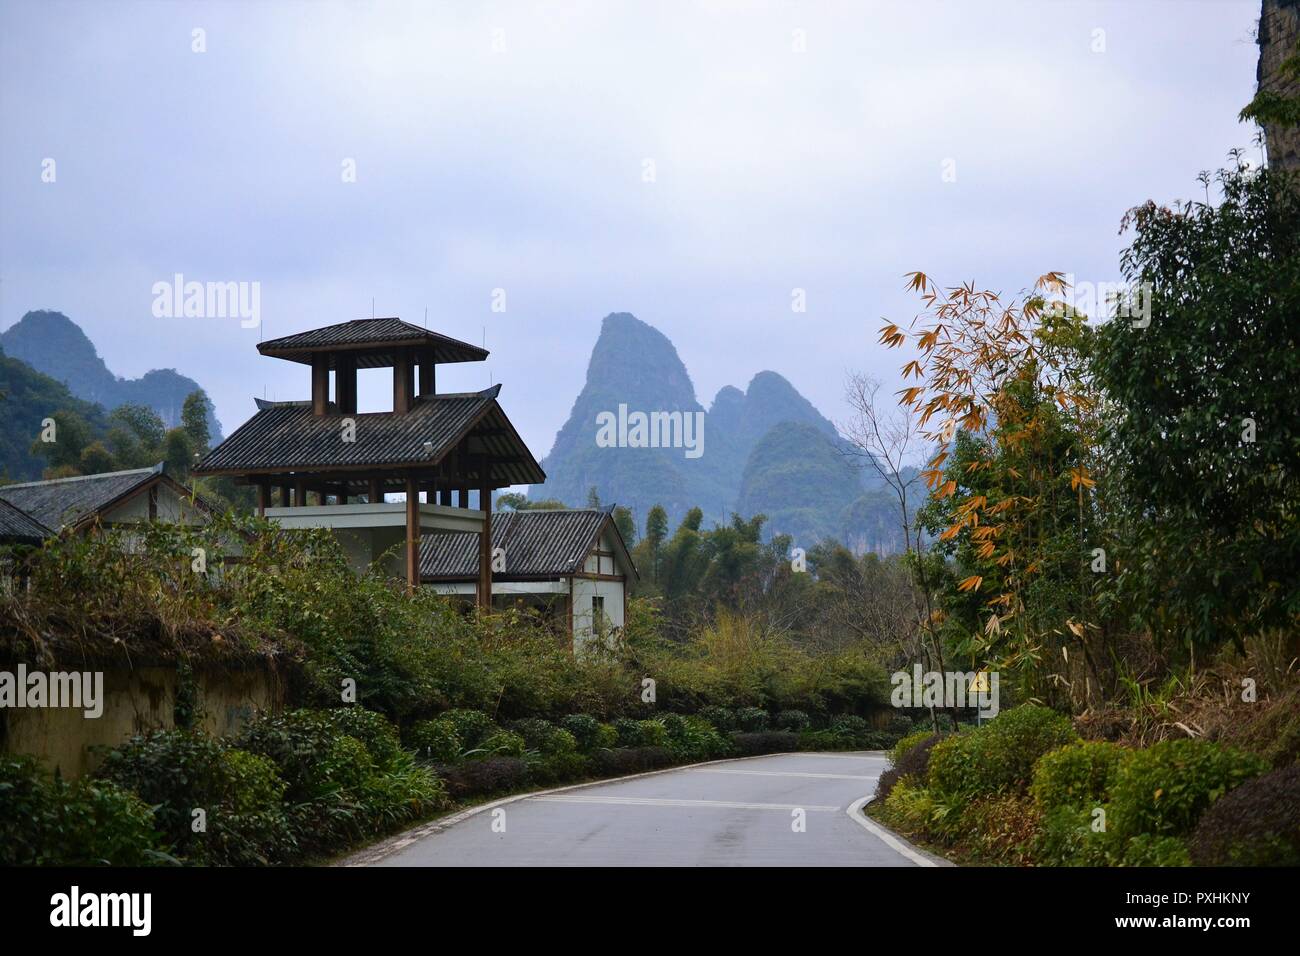 Karst landscape, hills of Yangshuo, Guilin, Guangxi, China Stock Photo